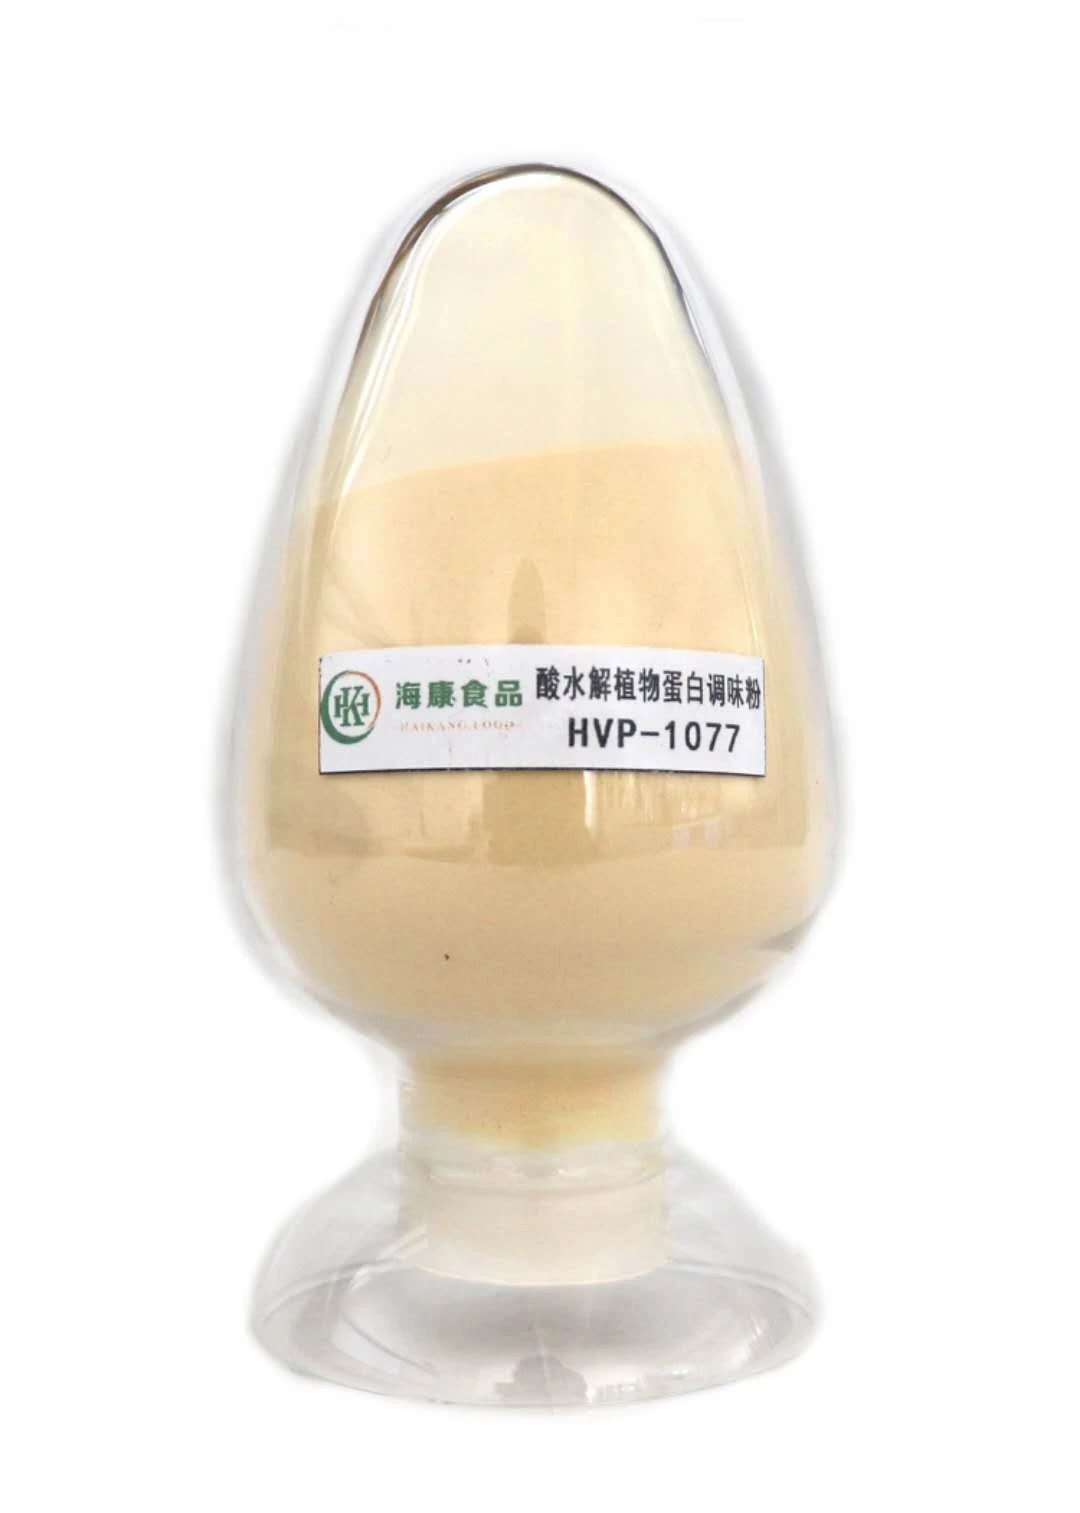 Wholesale high quality hydrolyzed vegetable protein seasoning powder